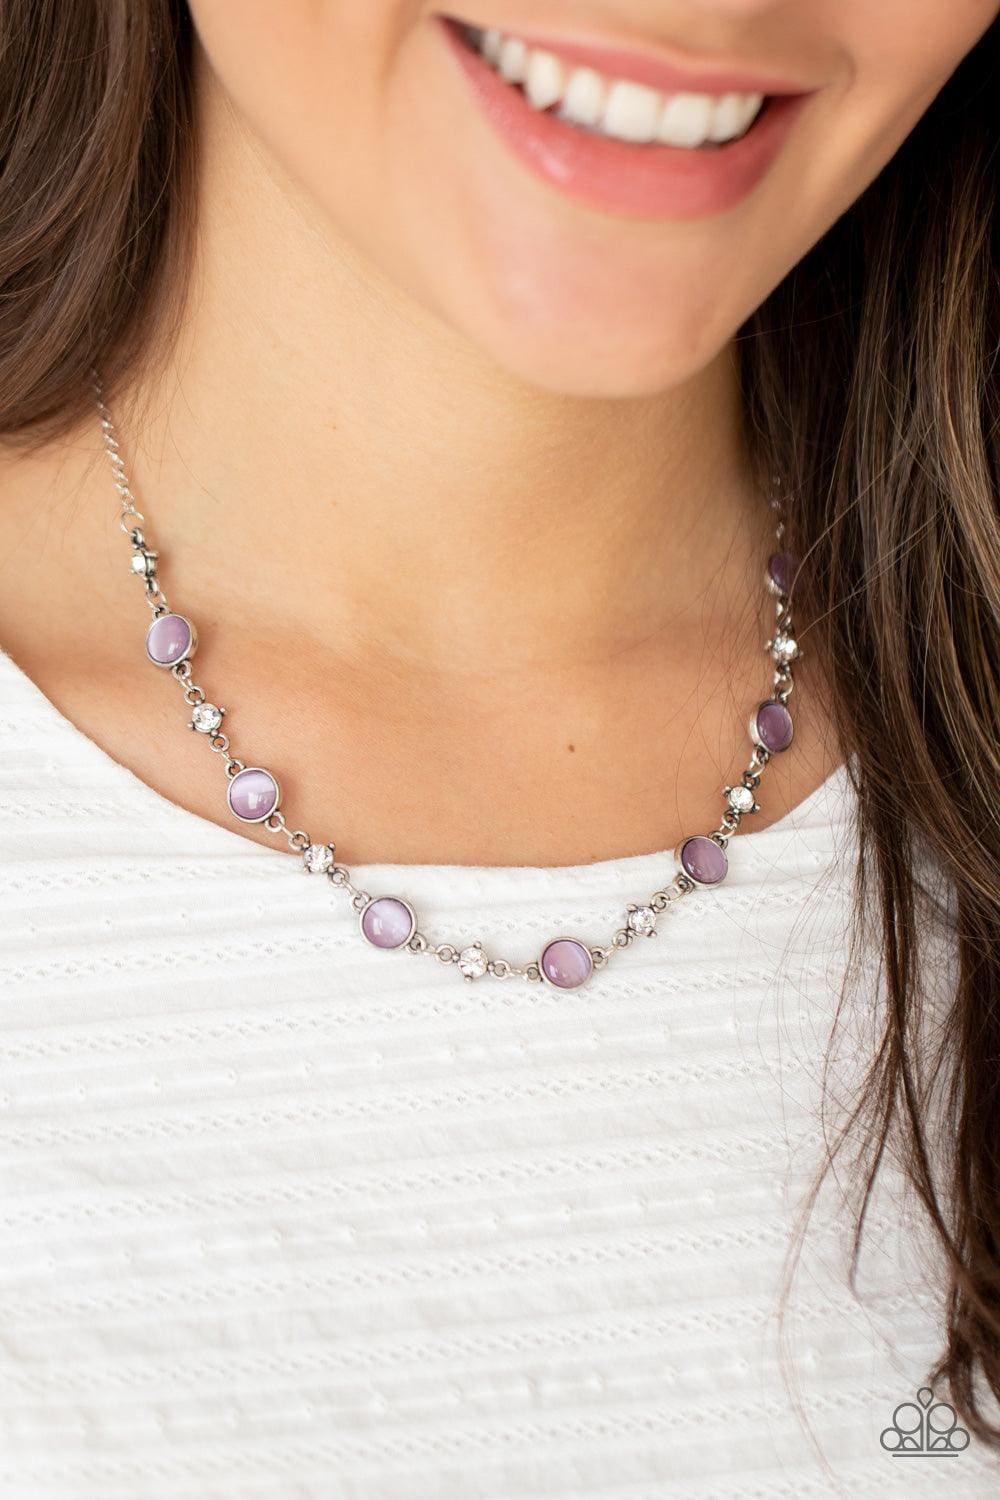 Paparazzi Accessories - Inner Illumination - Purple Necklace - Bling by JessieK